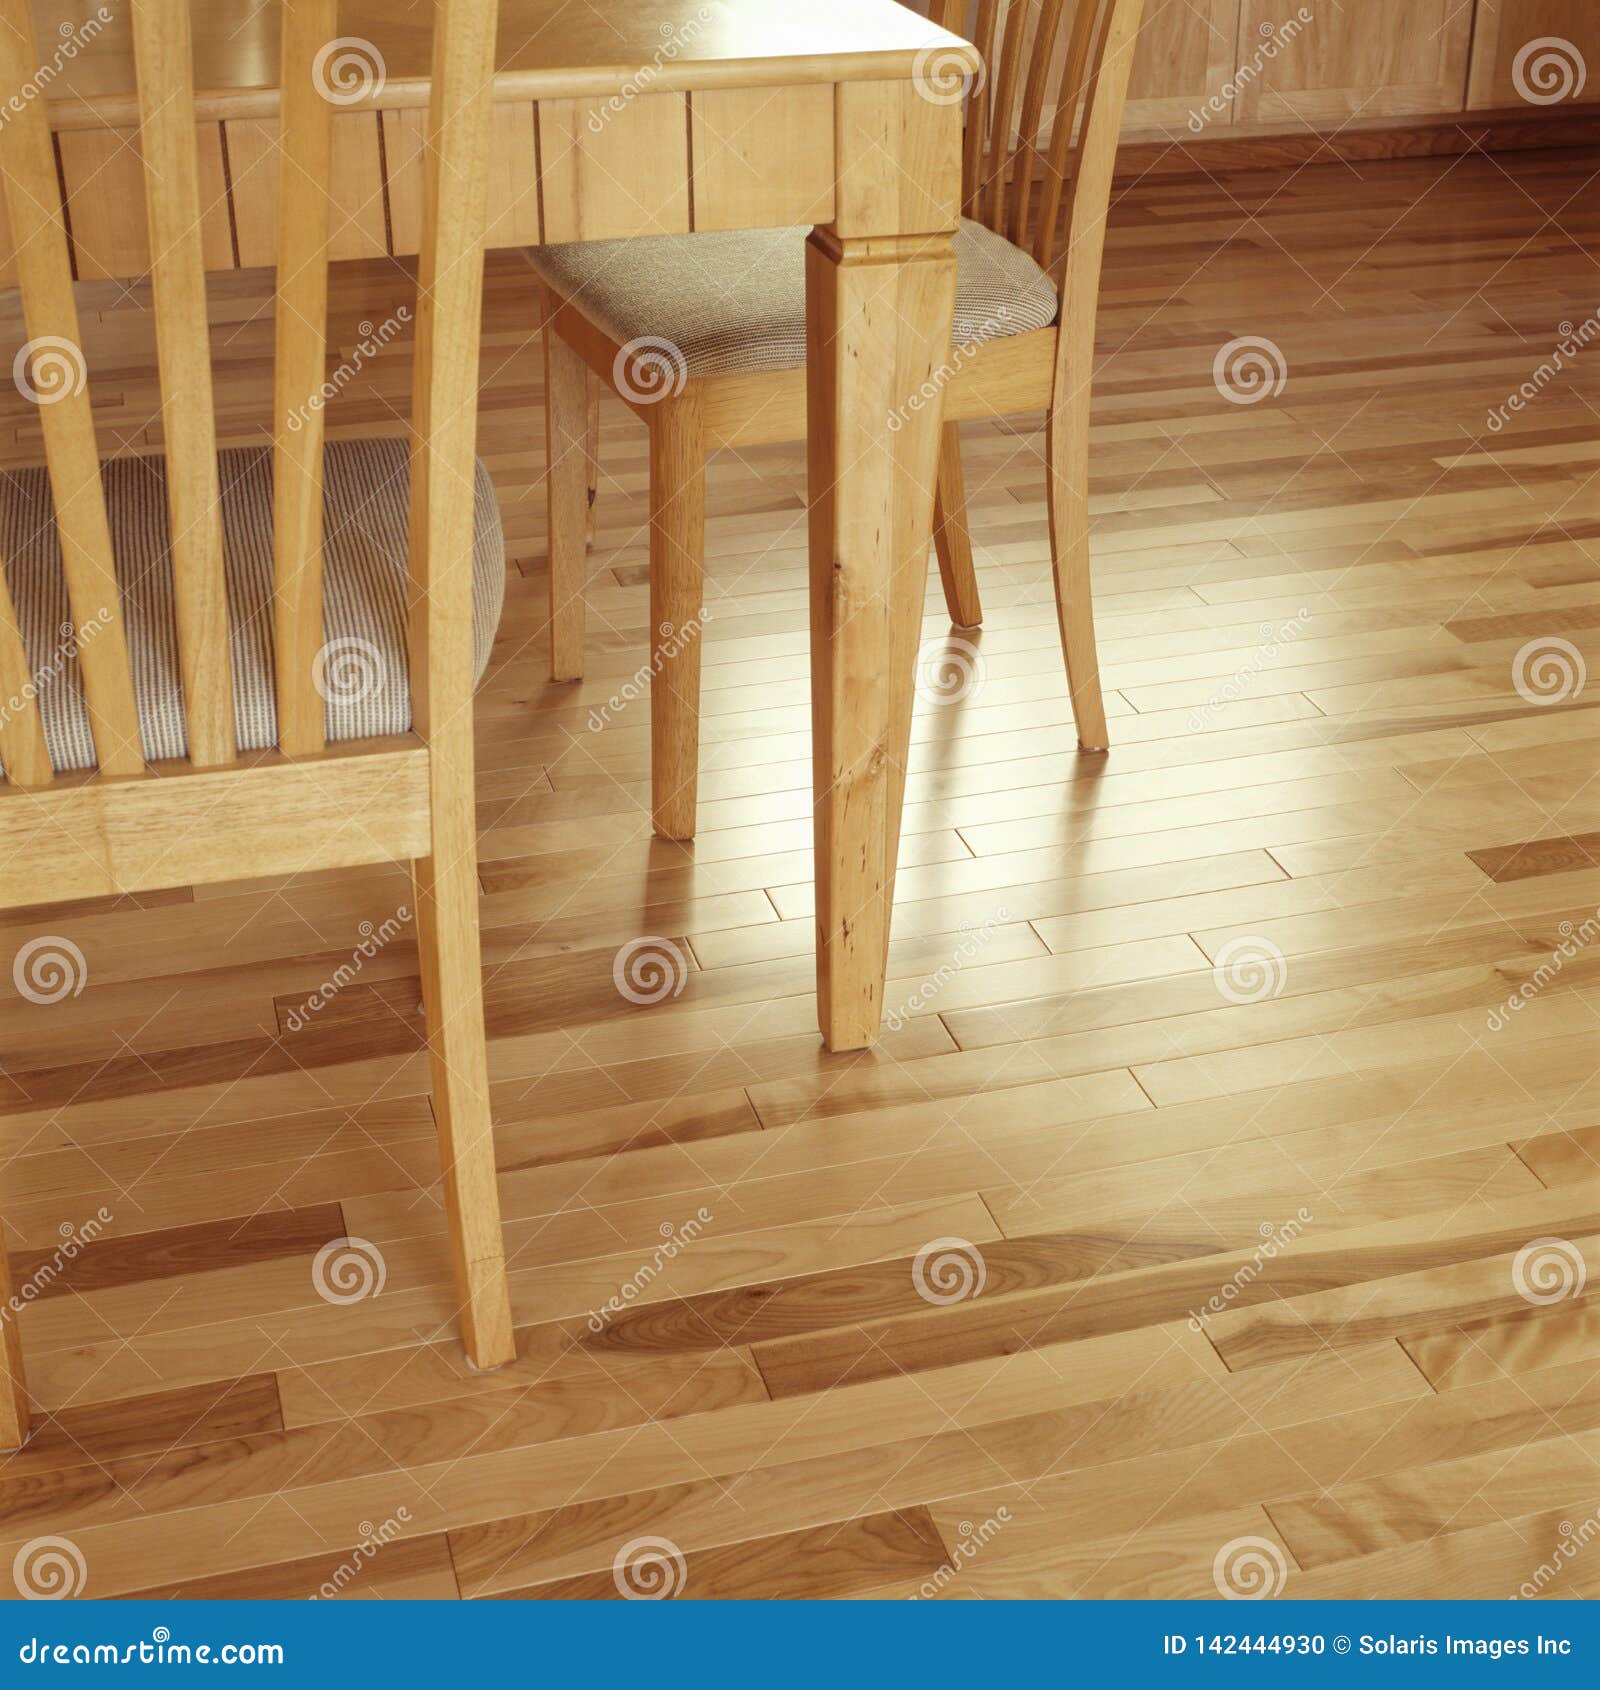 Clean Shiny Maple Wood Hardwood Floor Flooring In Contemporary